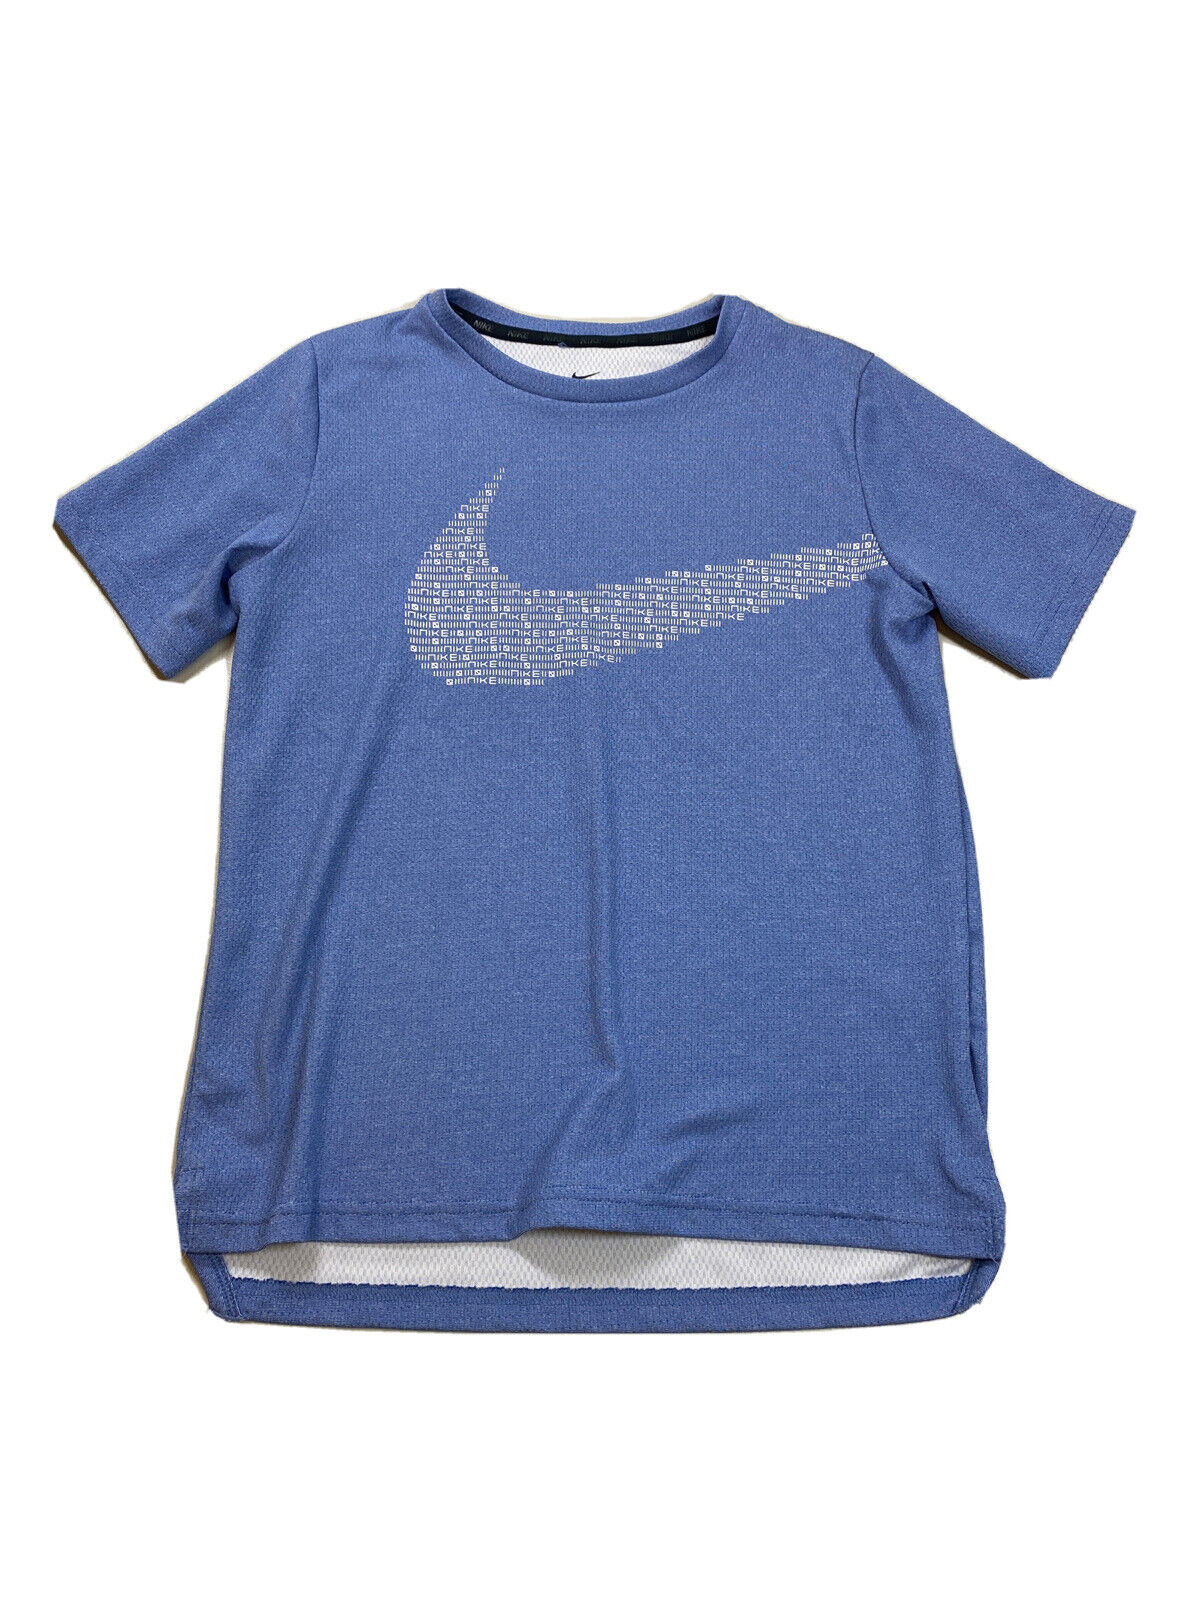 Nike Boys Blue Short Sleeve Dri-Fit Standard Fit Athletic T-Shirt - L